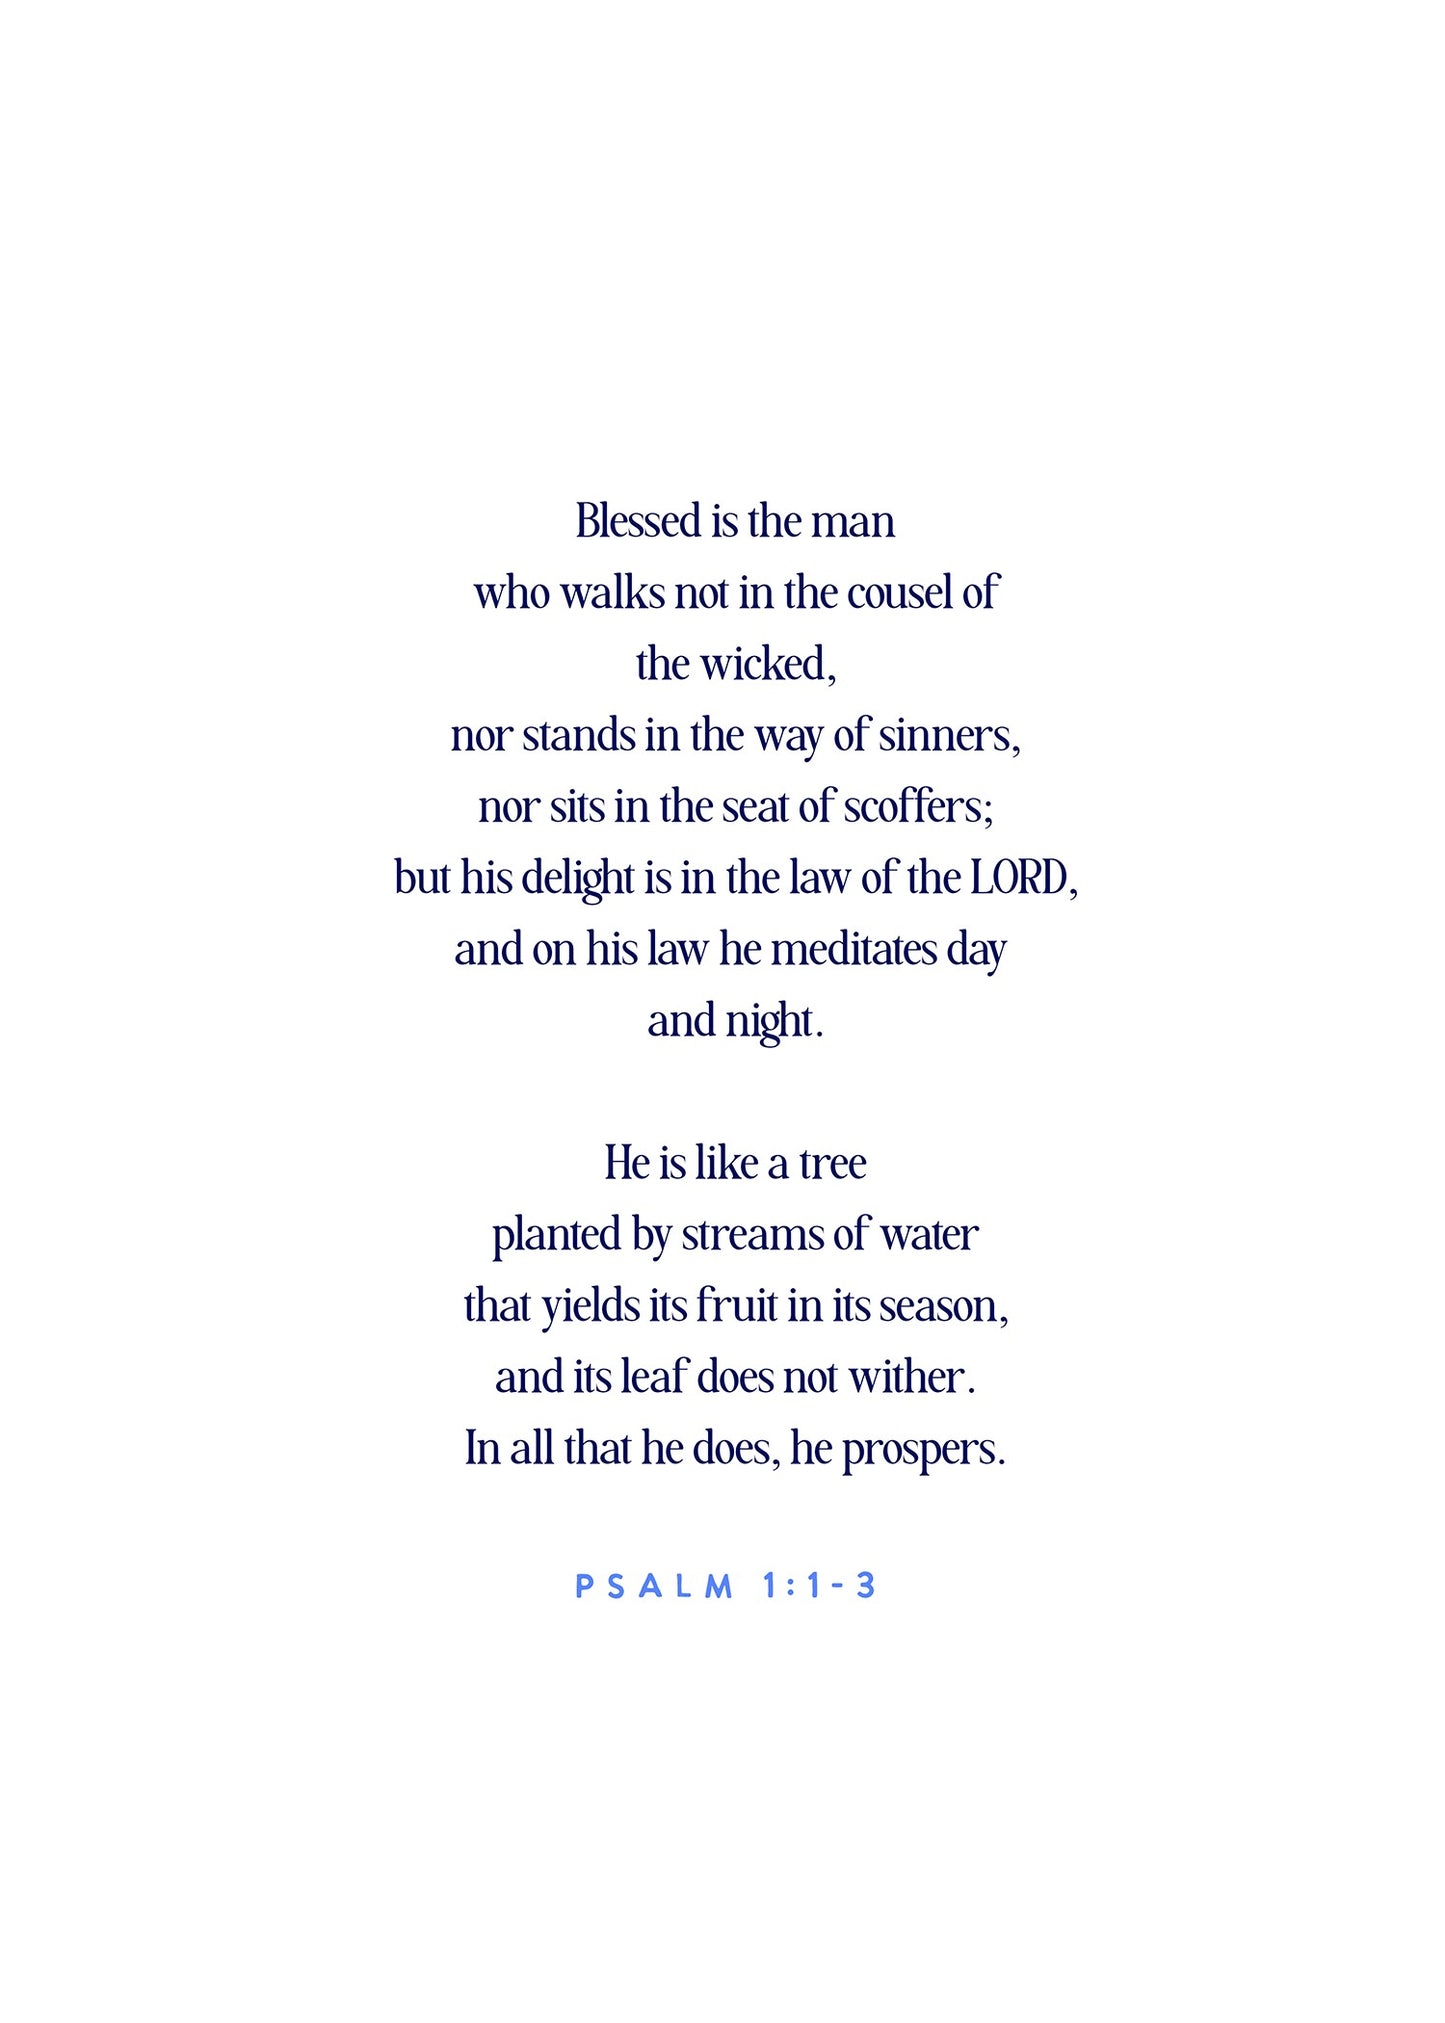 "Willow Tree" Psalm 1 Vertical Art Prints